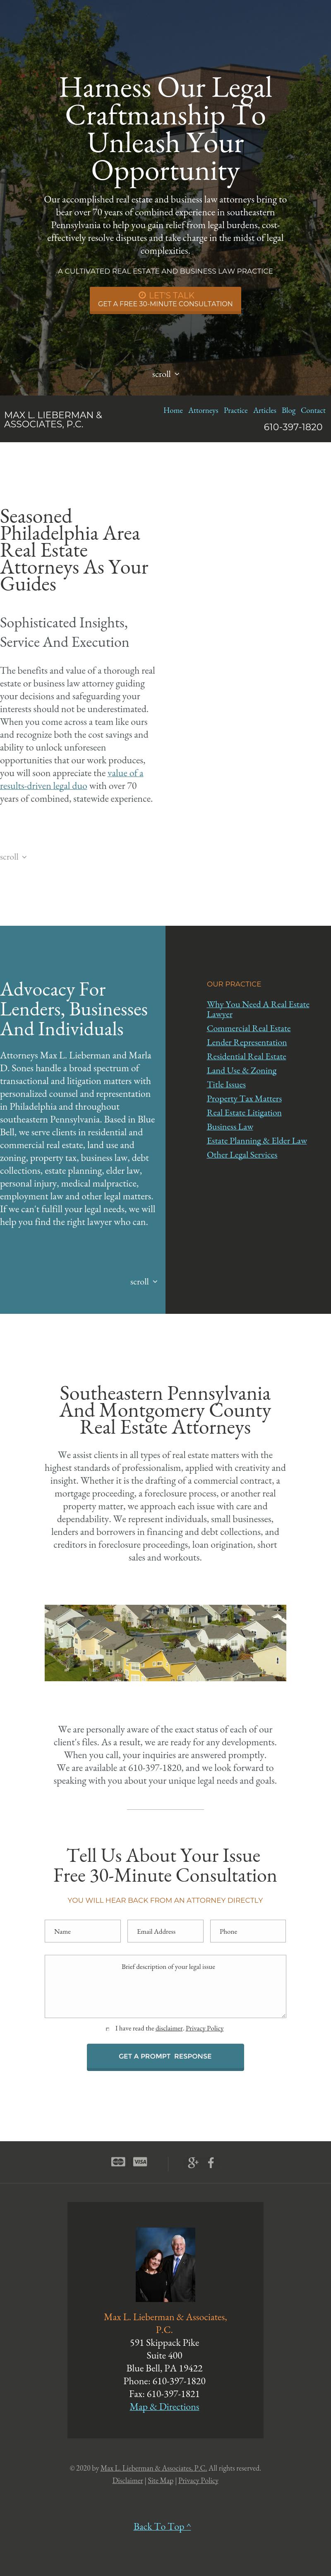 Max L. Lieberman & Associates, P.C. - Blue Bell PA Lawyers